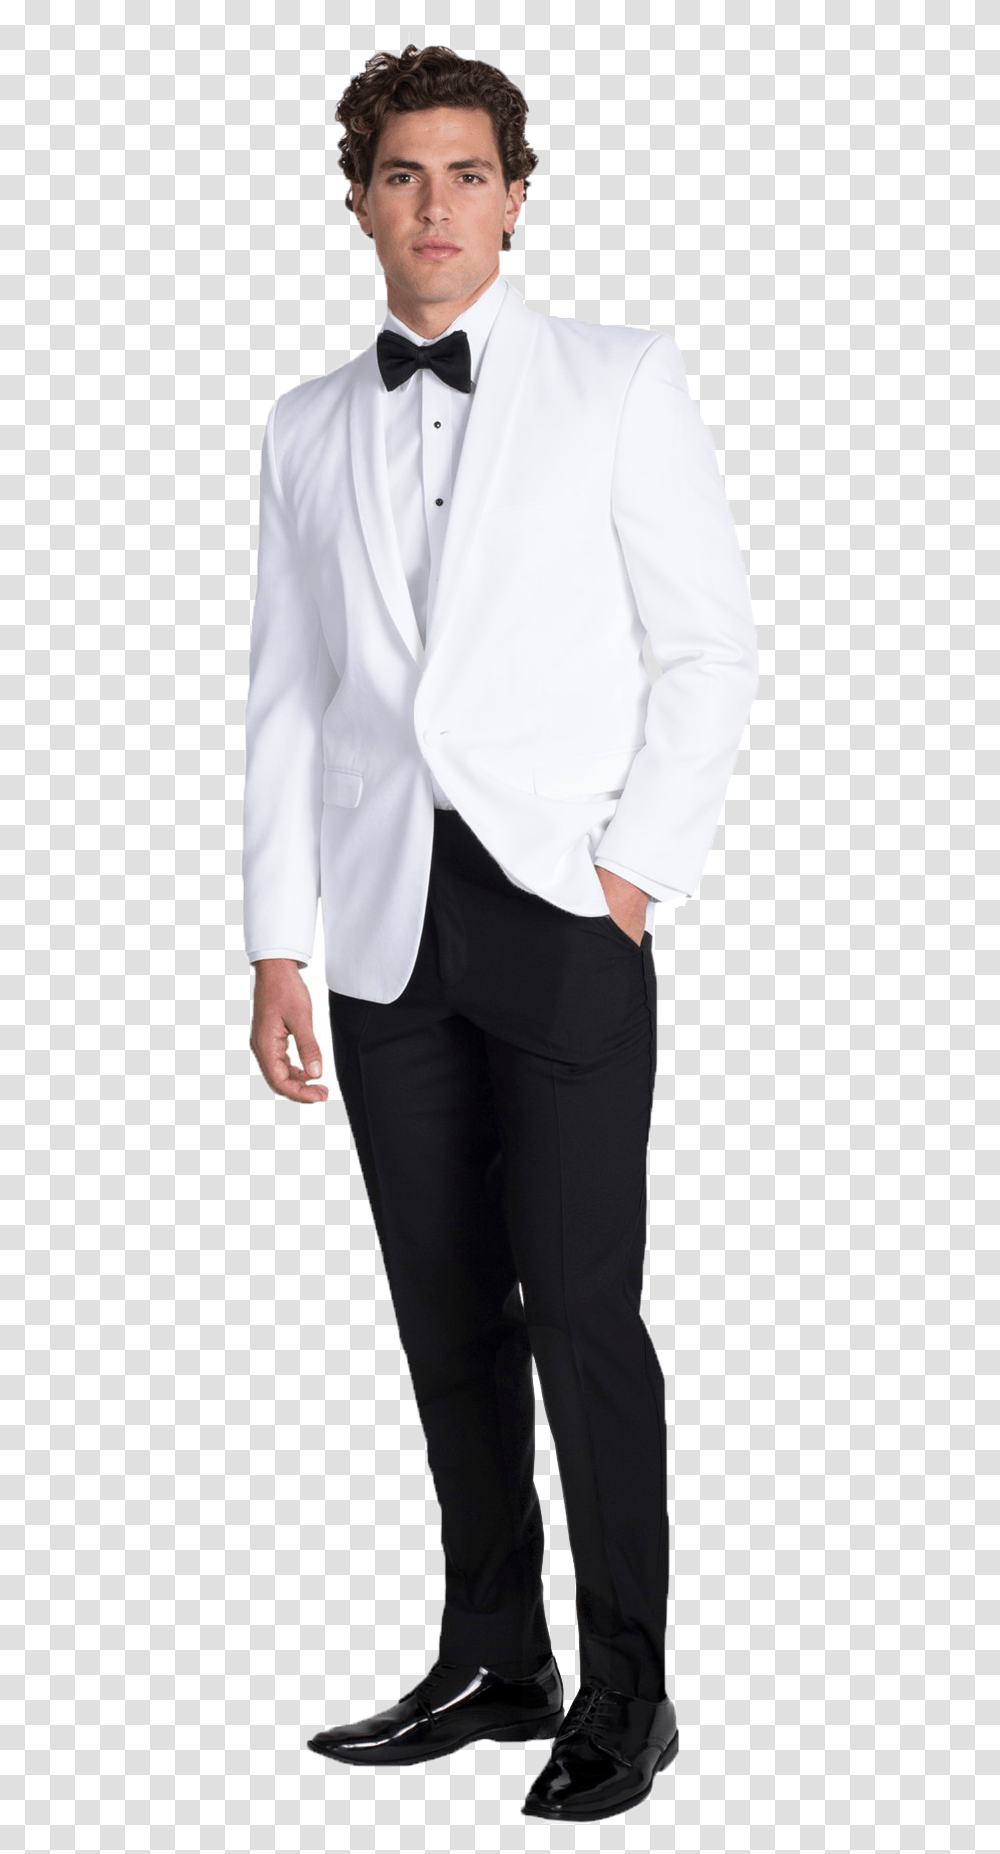 White Tuxedo Suit Image File White Tuxedo Hd, Shirt, Tie, Overcoat Transparent Png